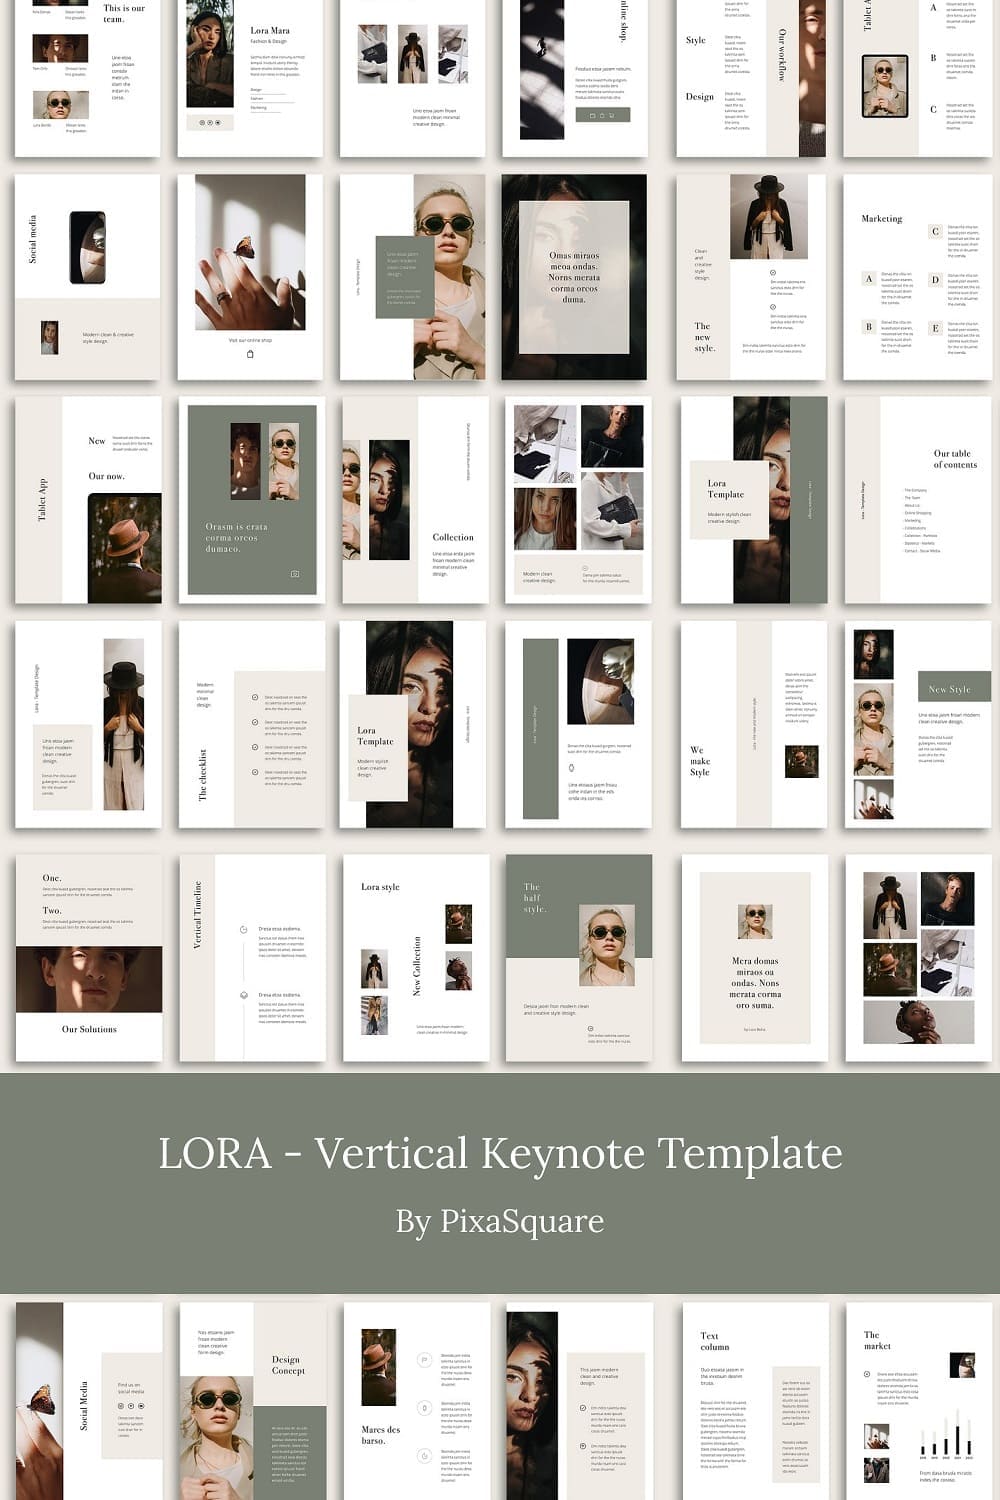 Lora vertical keynote template for Pinterst.